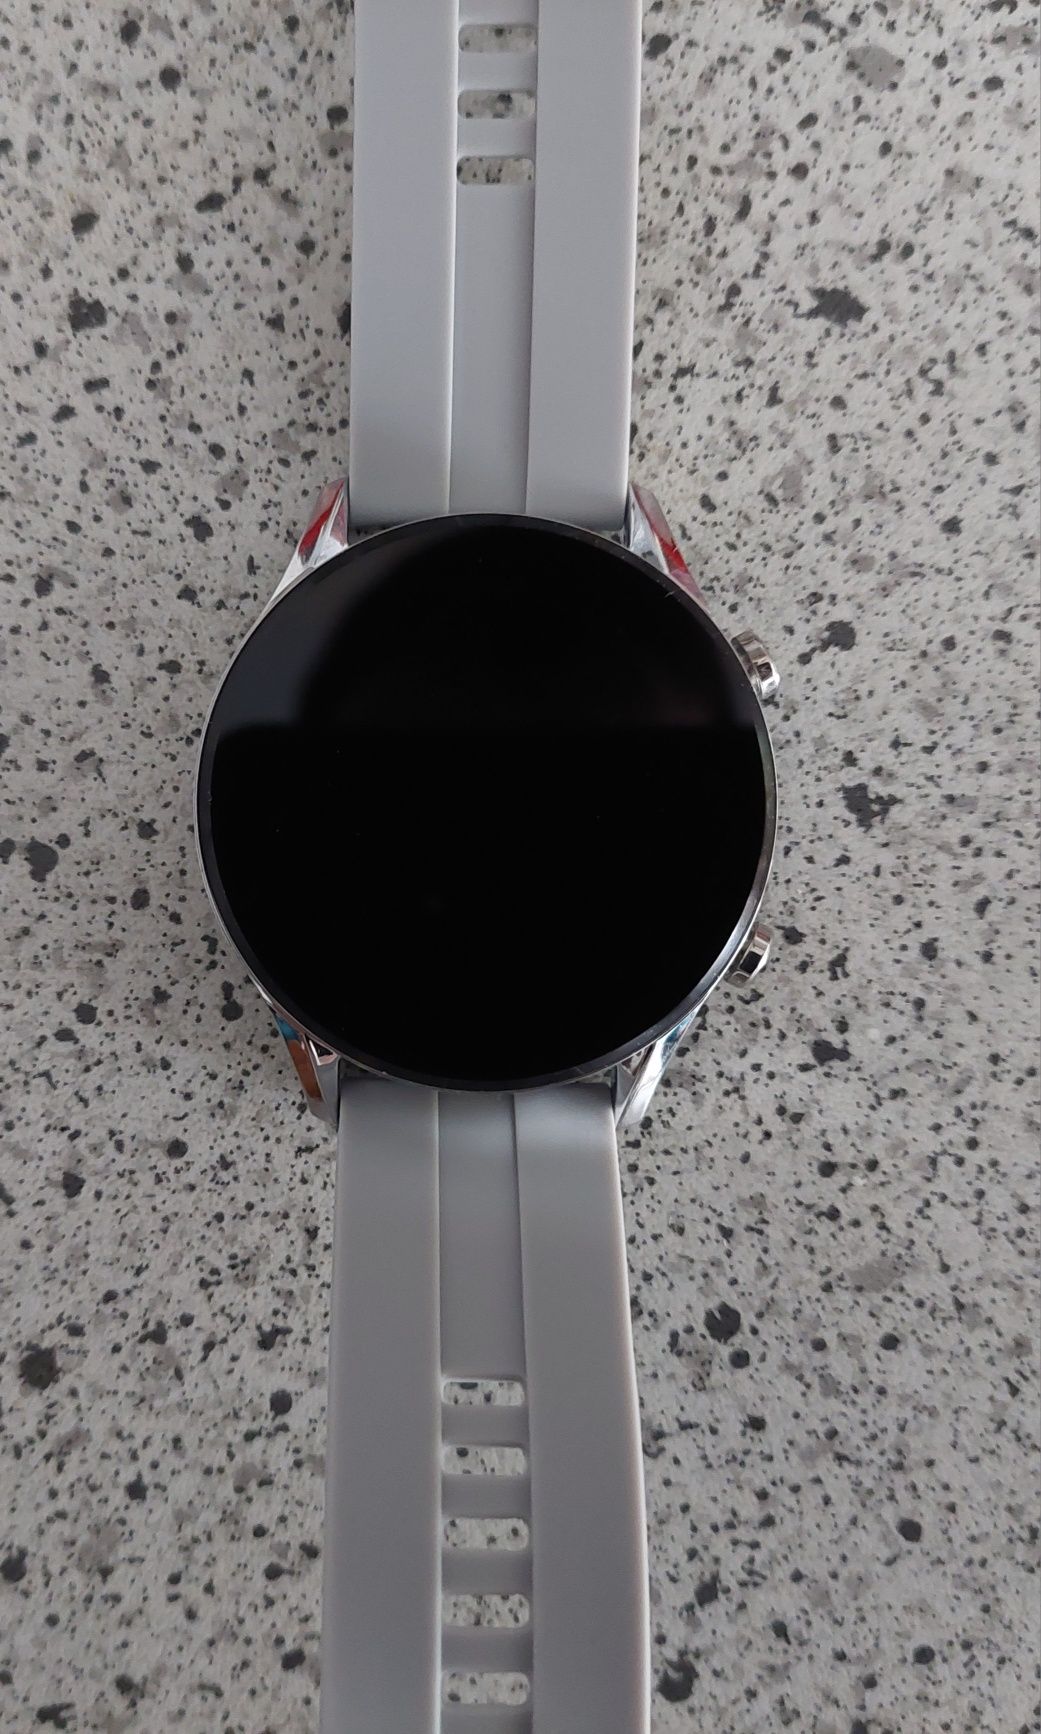 Smartwatch HiFuture FutureGo Flex Argintiu